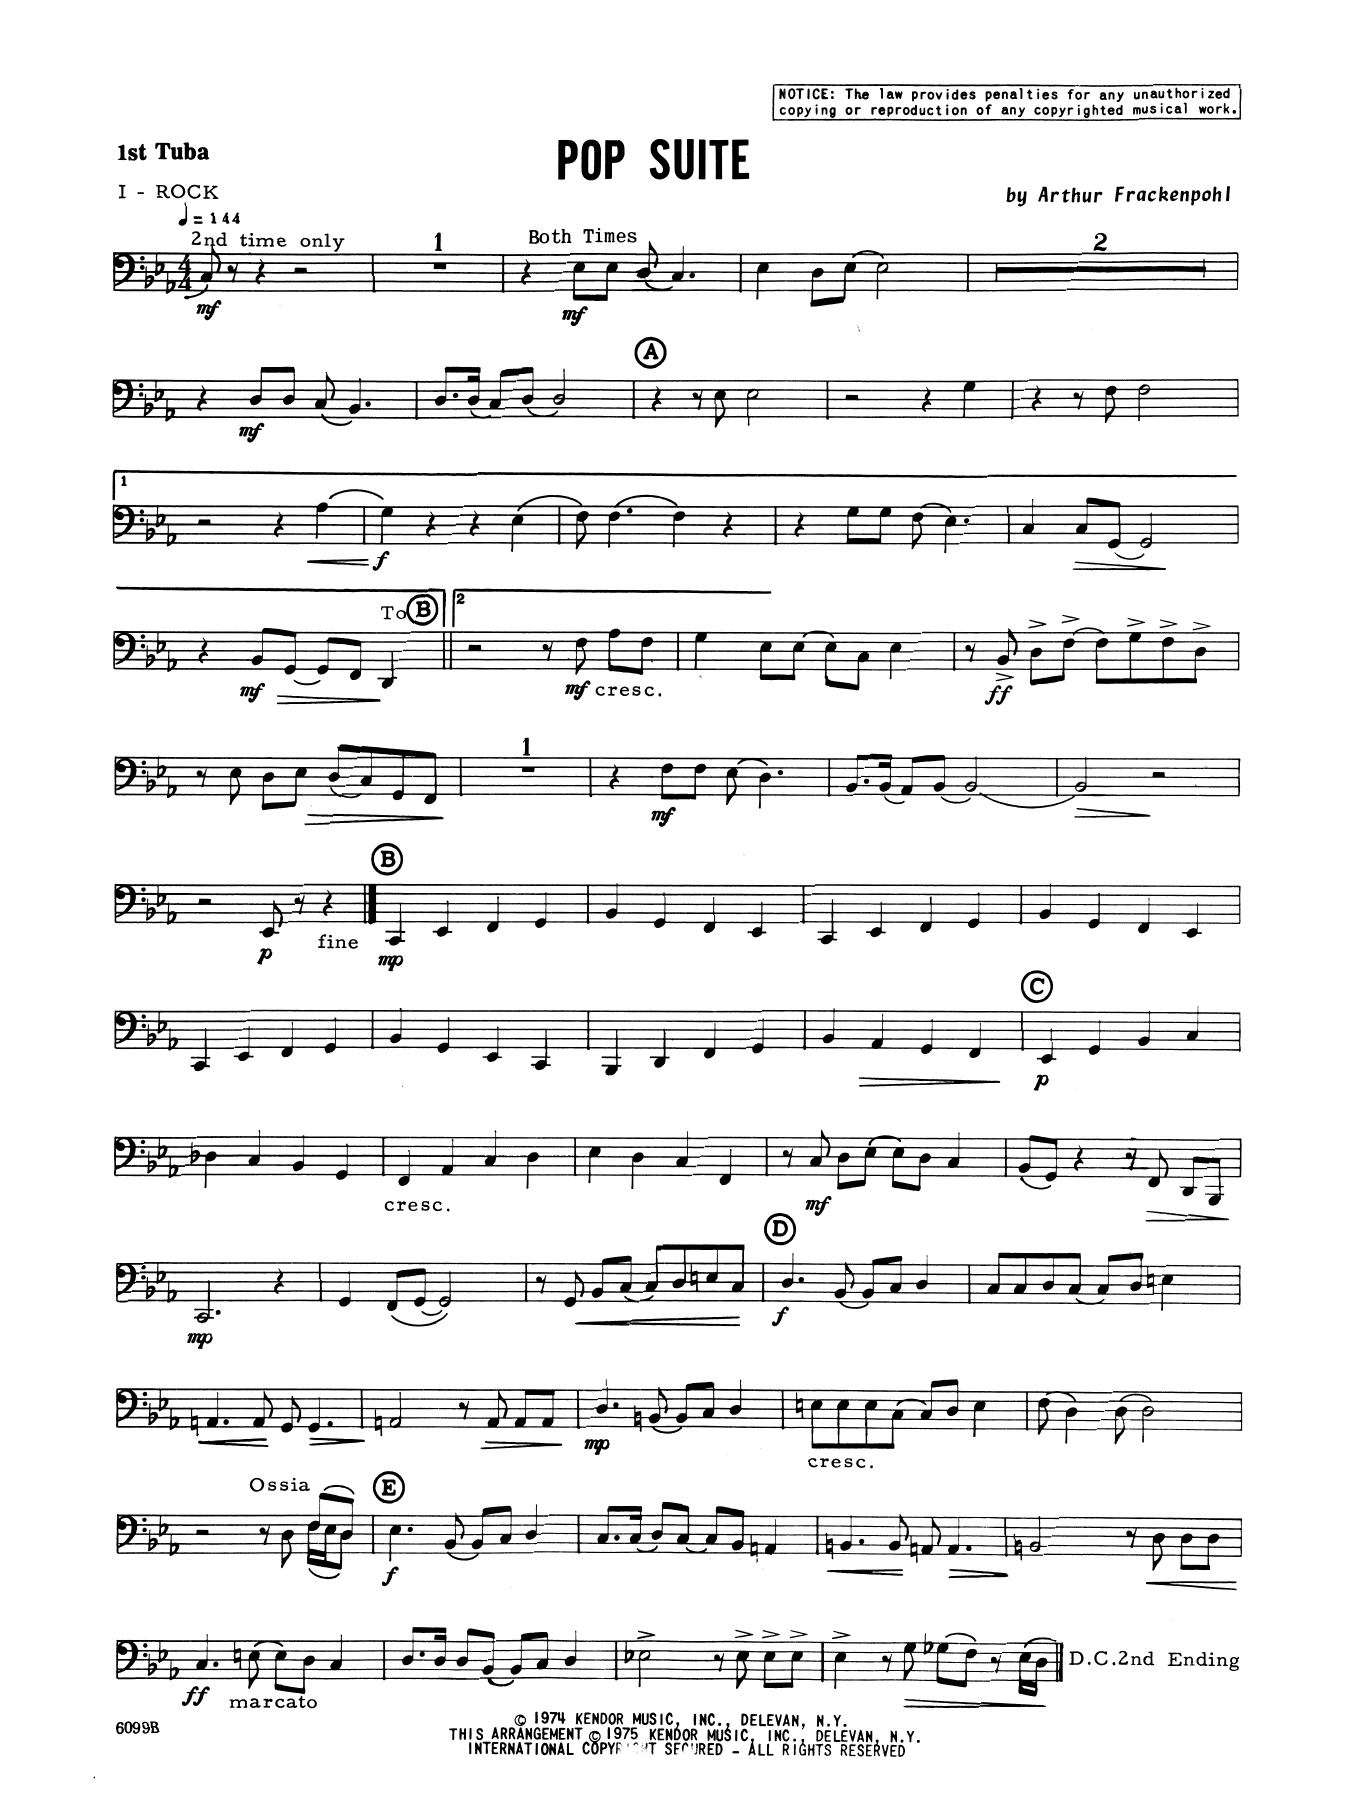 Download Arthur Frackenpohl Pop Suite - 1st Tuba Sheet Music